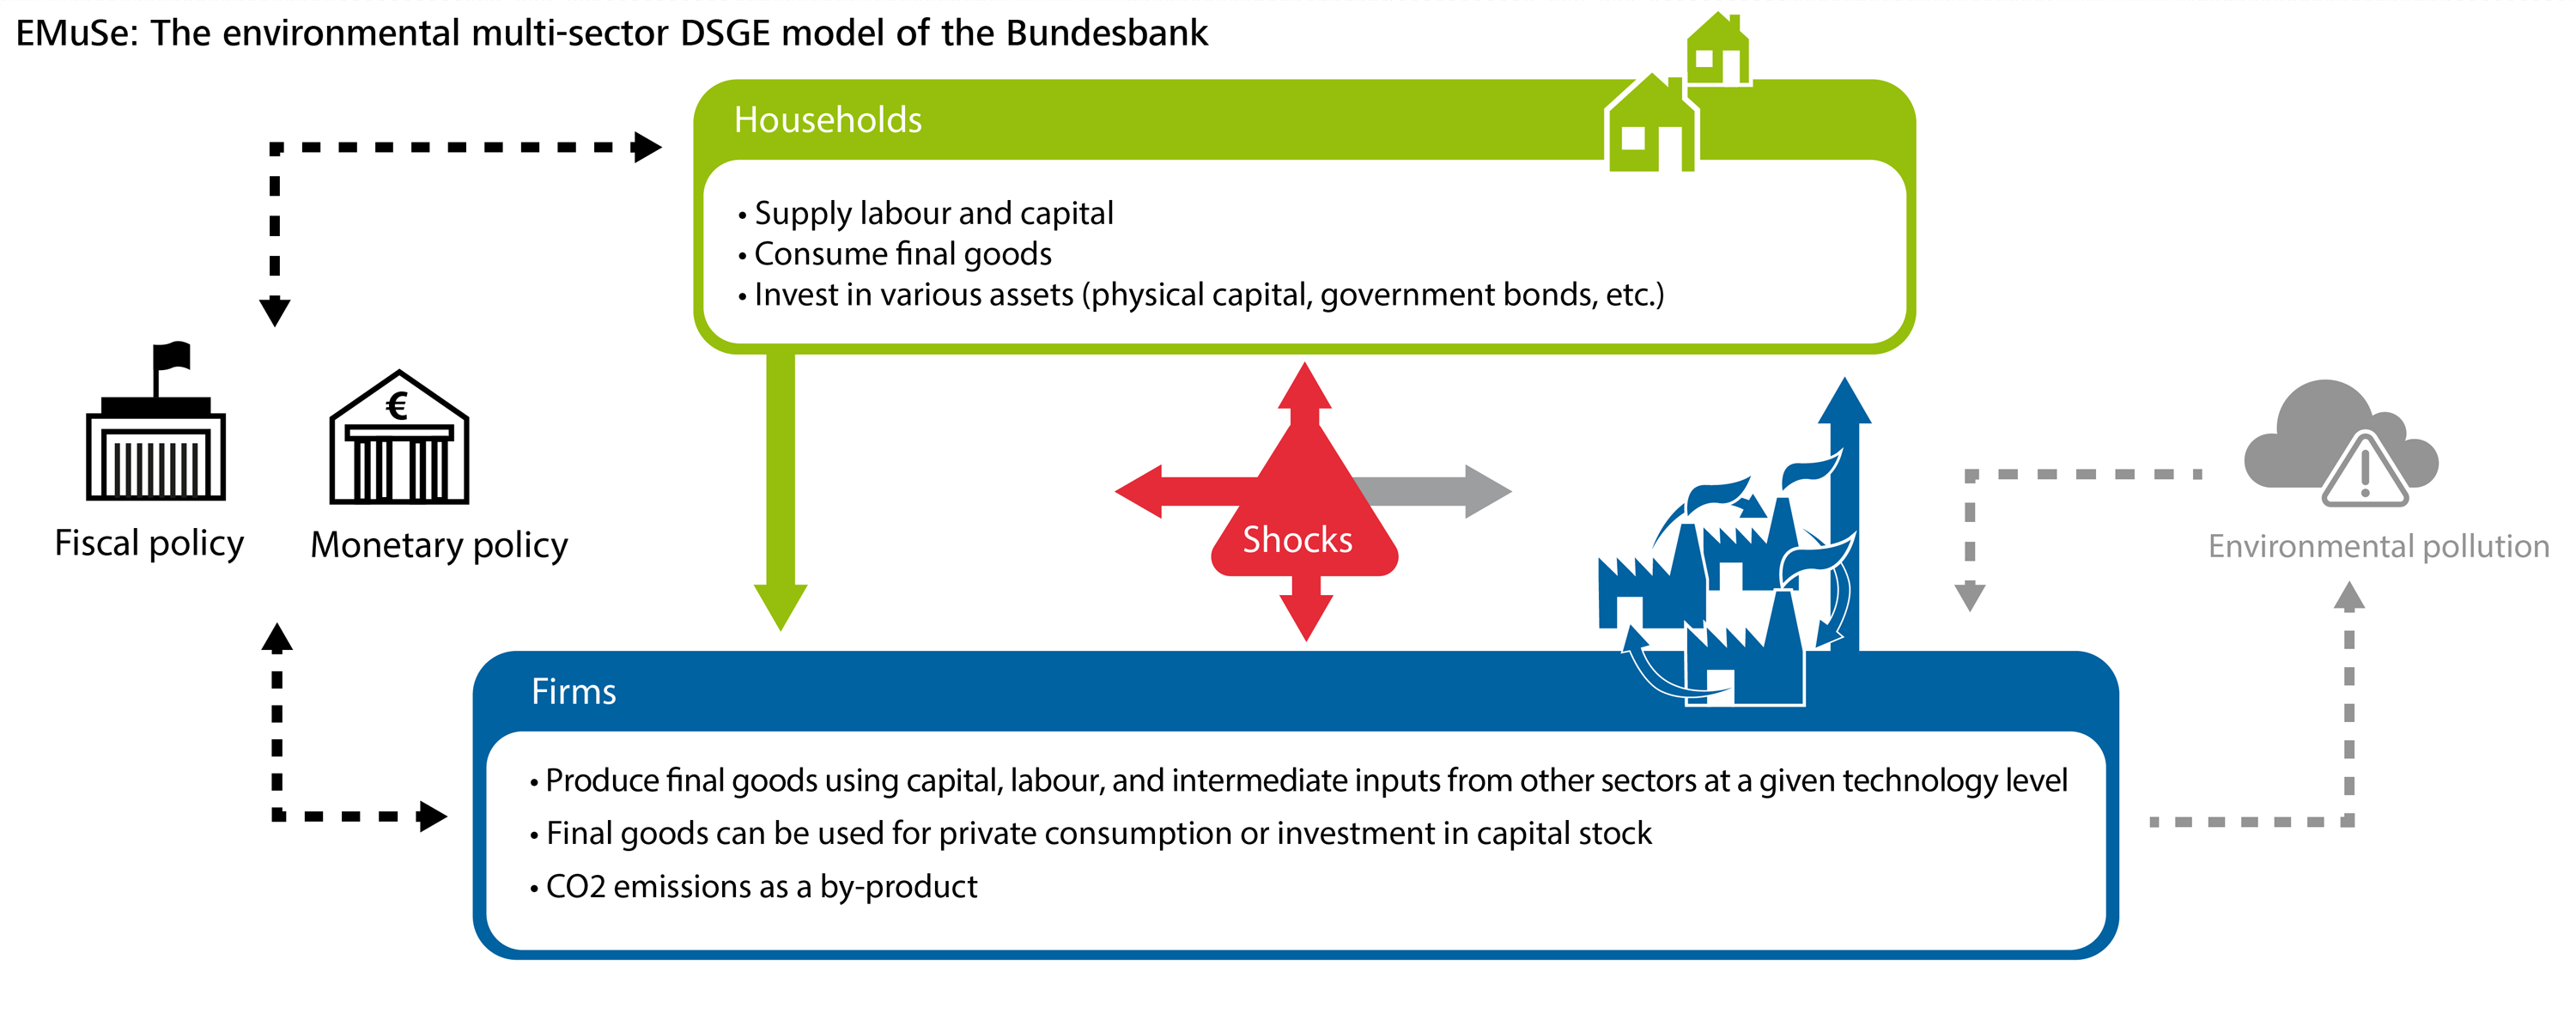 EMuSe: The environmental multi-sector DSGE model of the Bundesbank